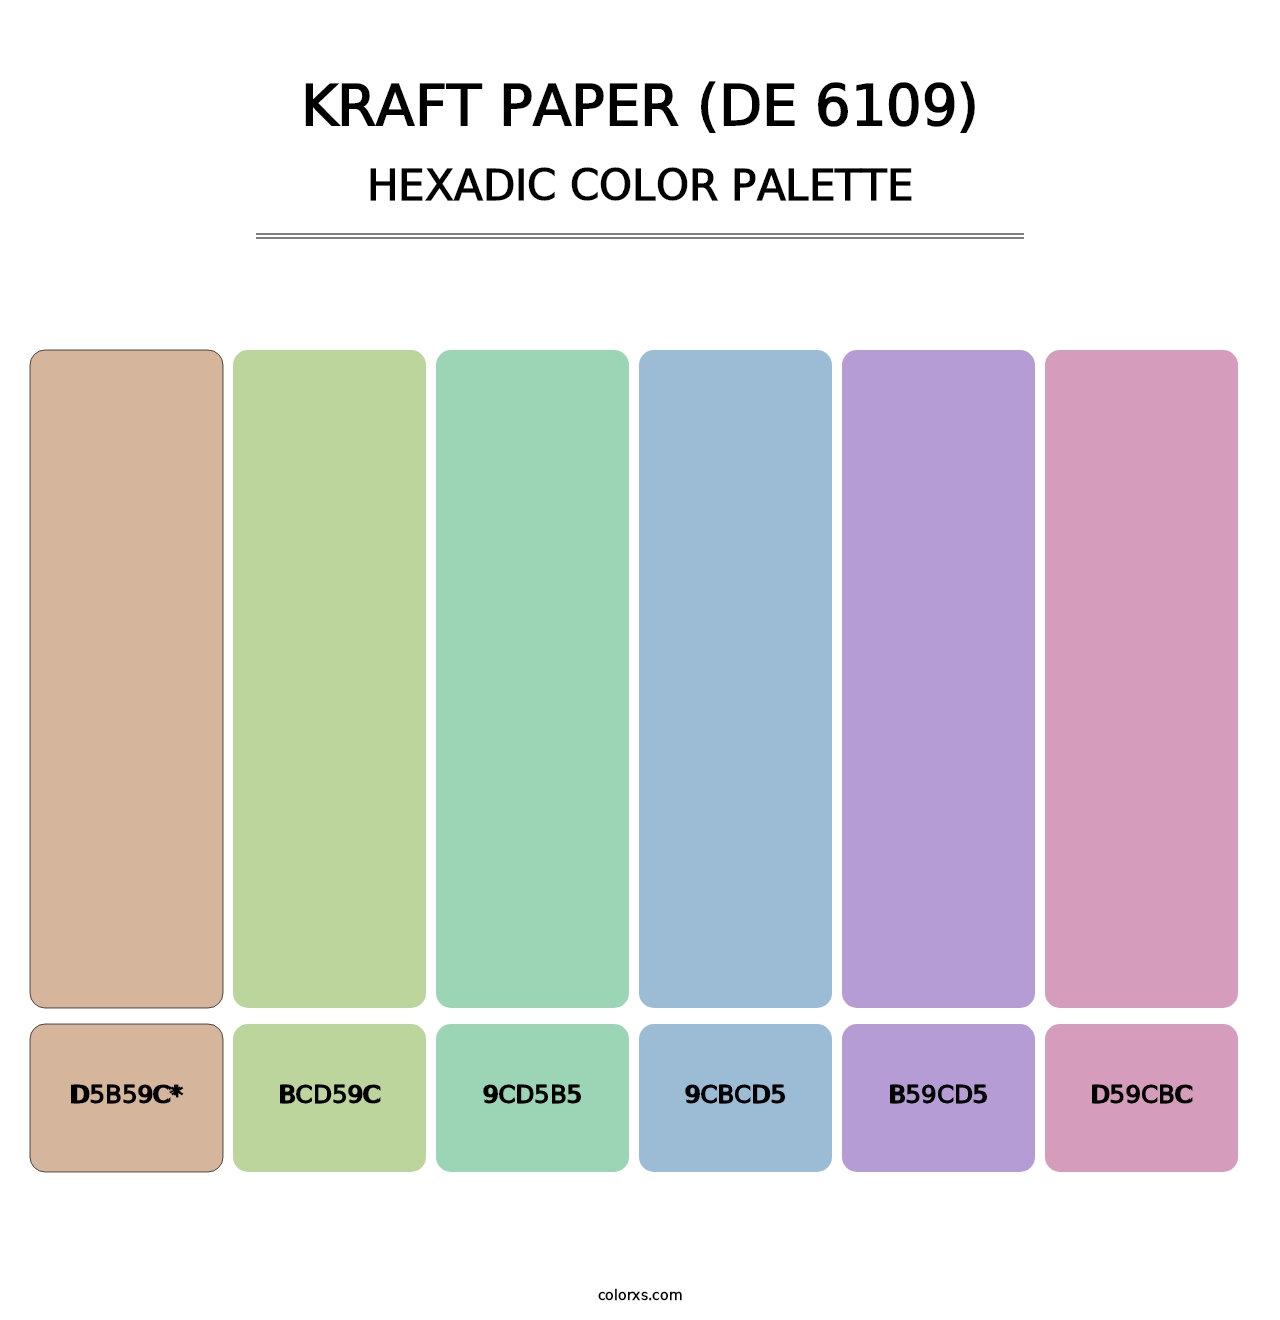 Kraft Paper (DE 6109) - Hexadic Color Palette